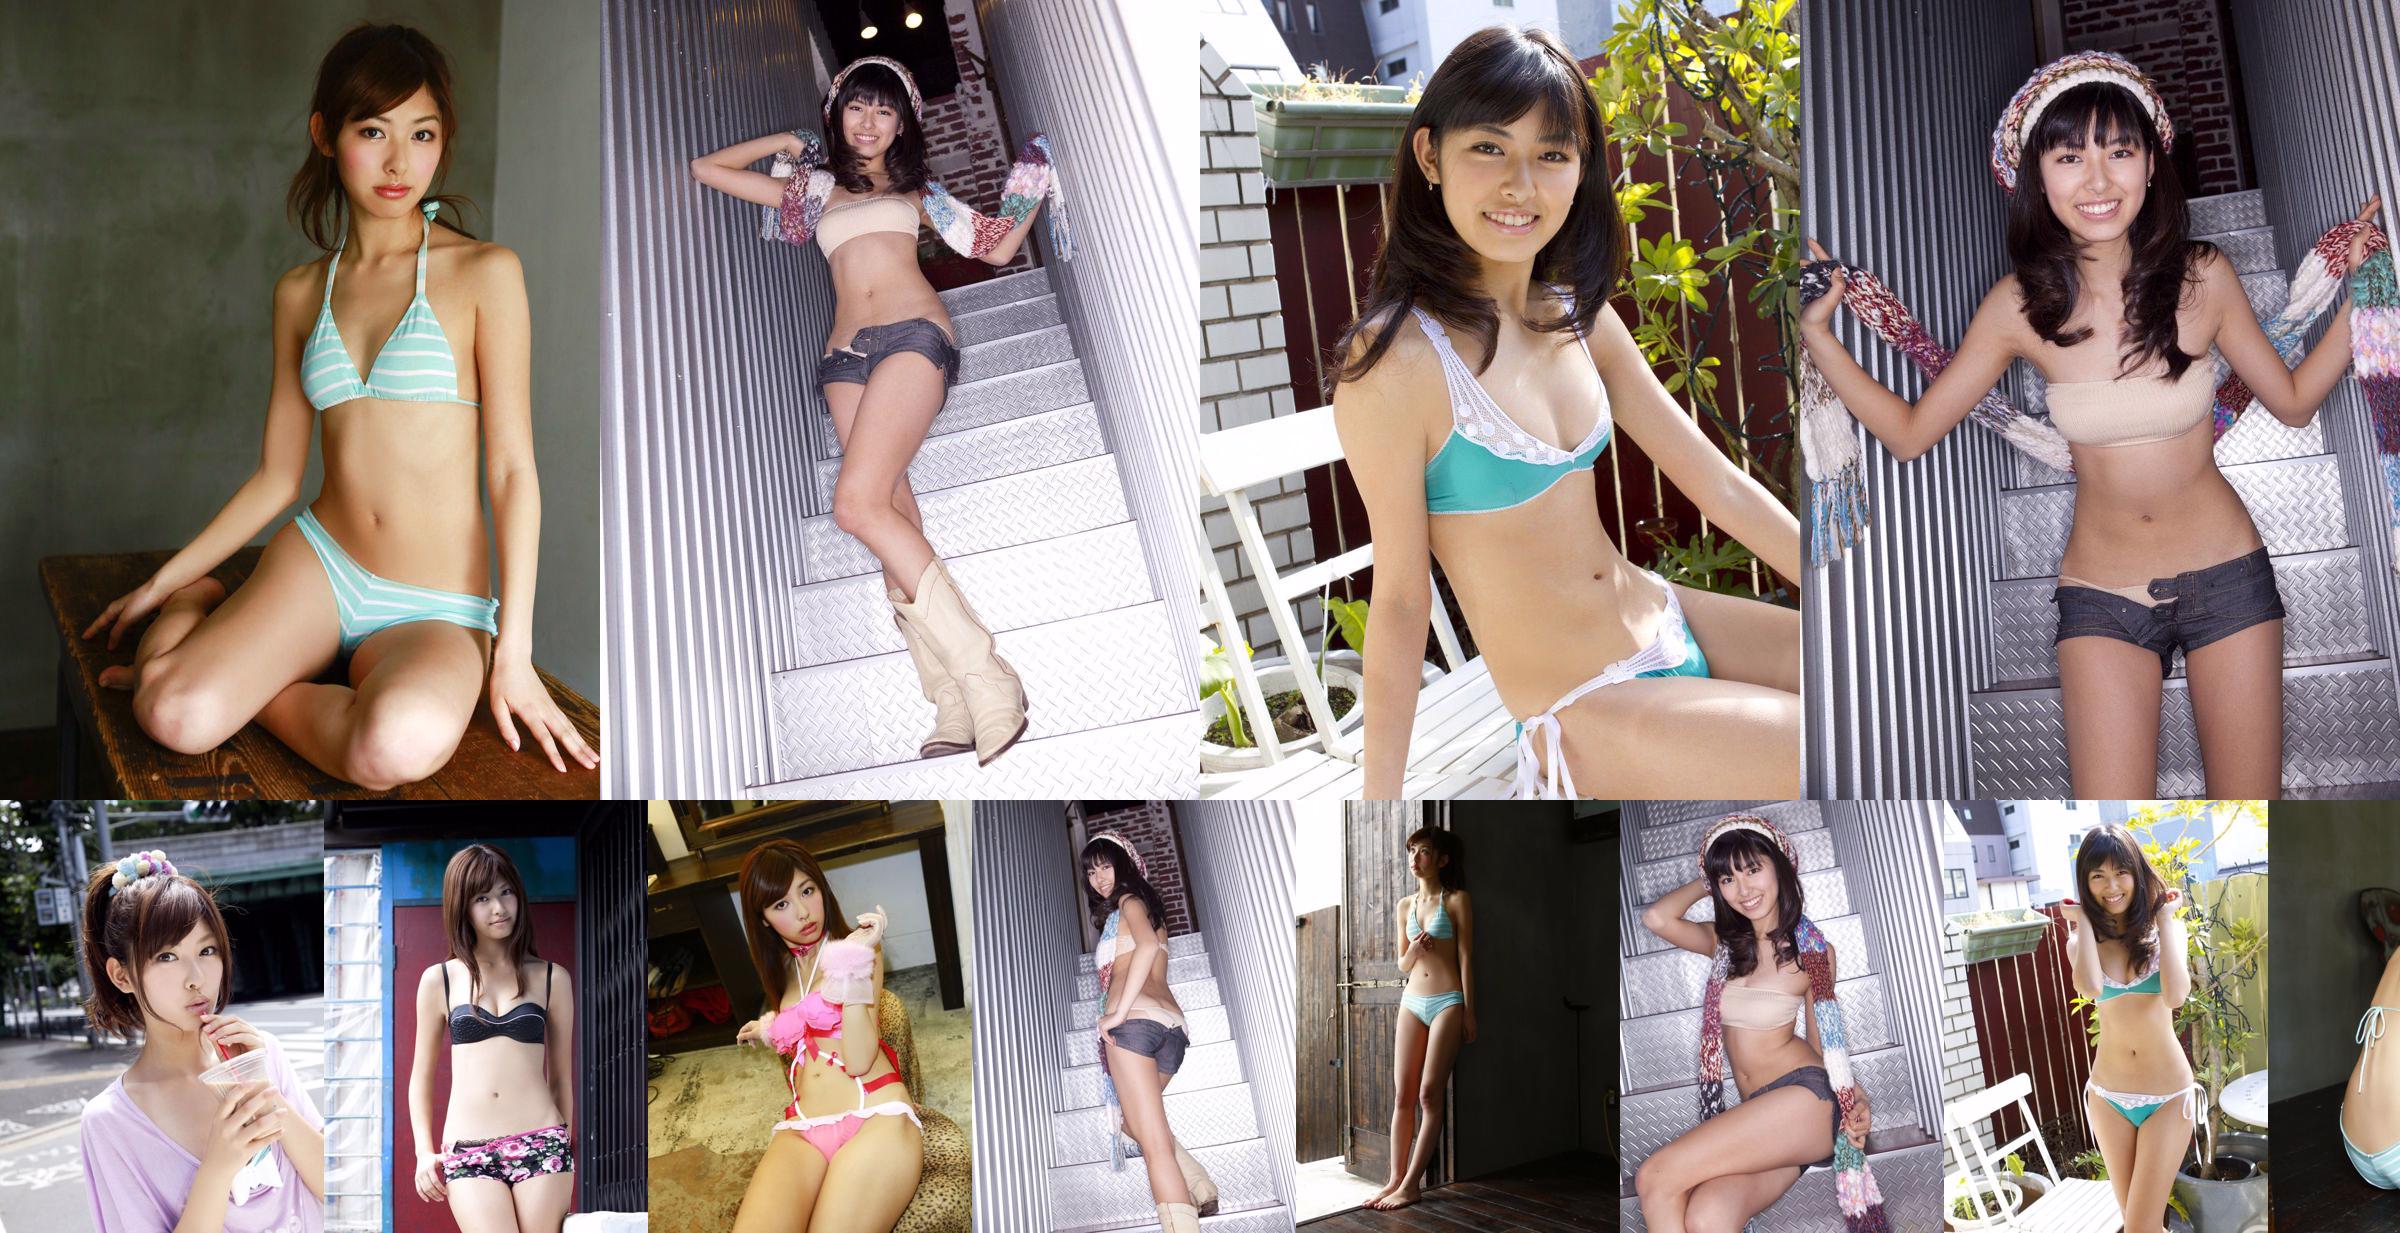 Yurika Tachibana / Yurika Tachibana "Be a Babe" [Sabra.net] Strictly Girls No.7a80aa Page 19